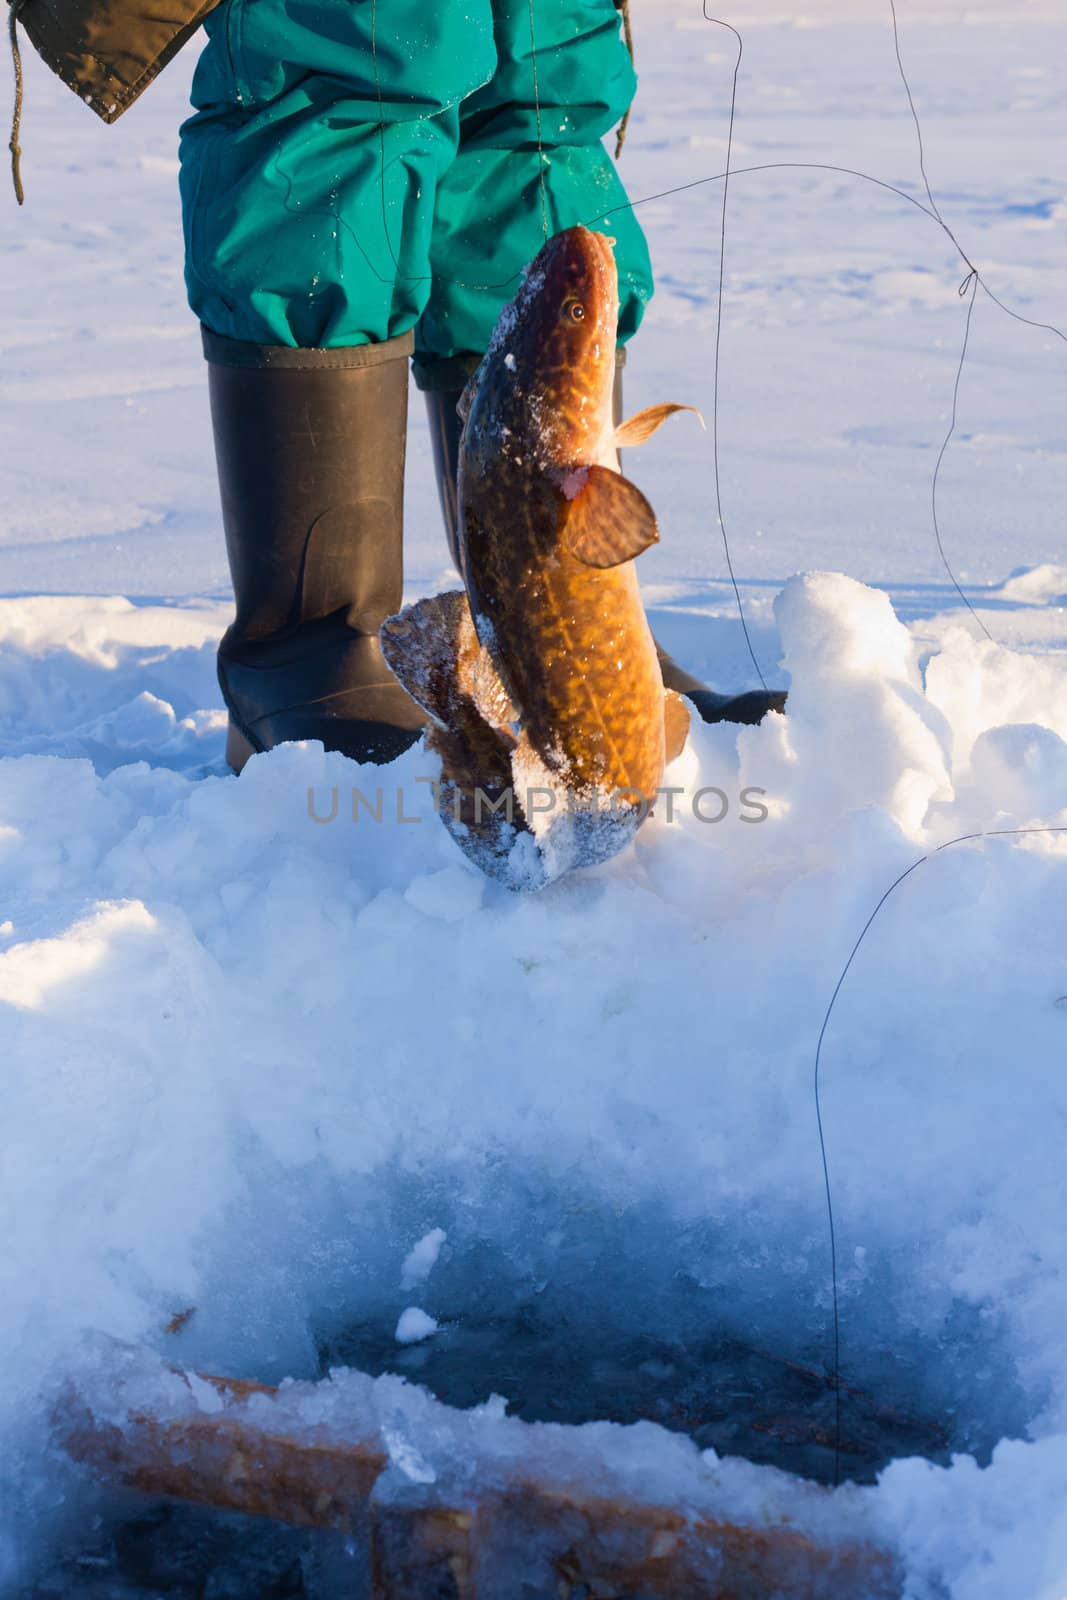 Ice-fishing: Pulling up nice sized Burbot (Lota lota).